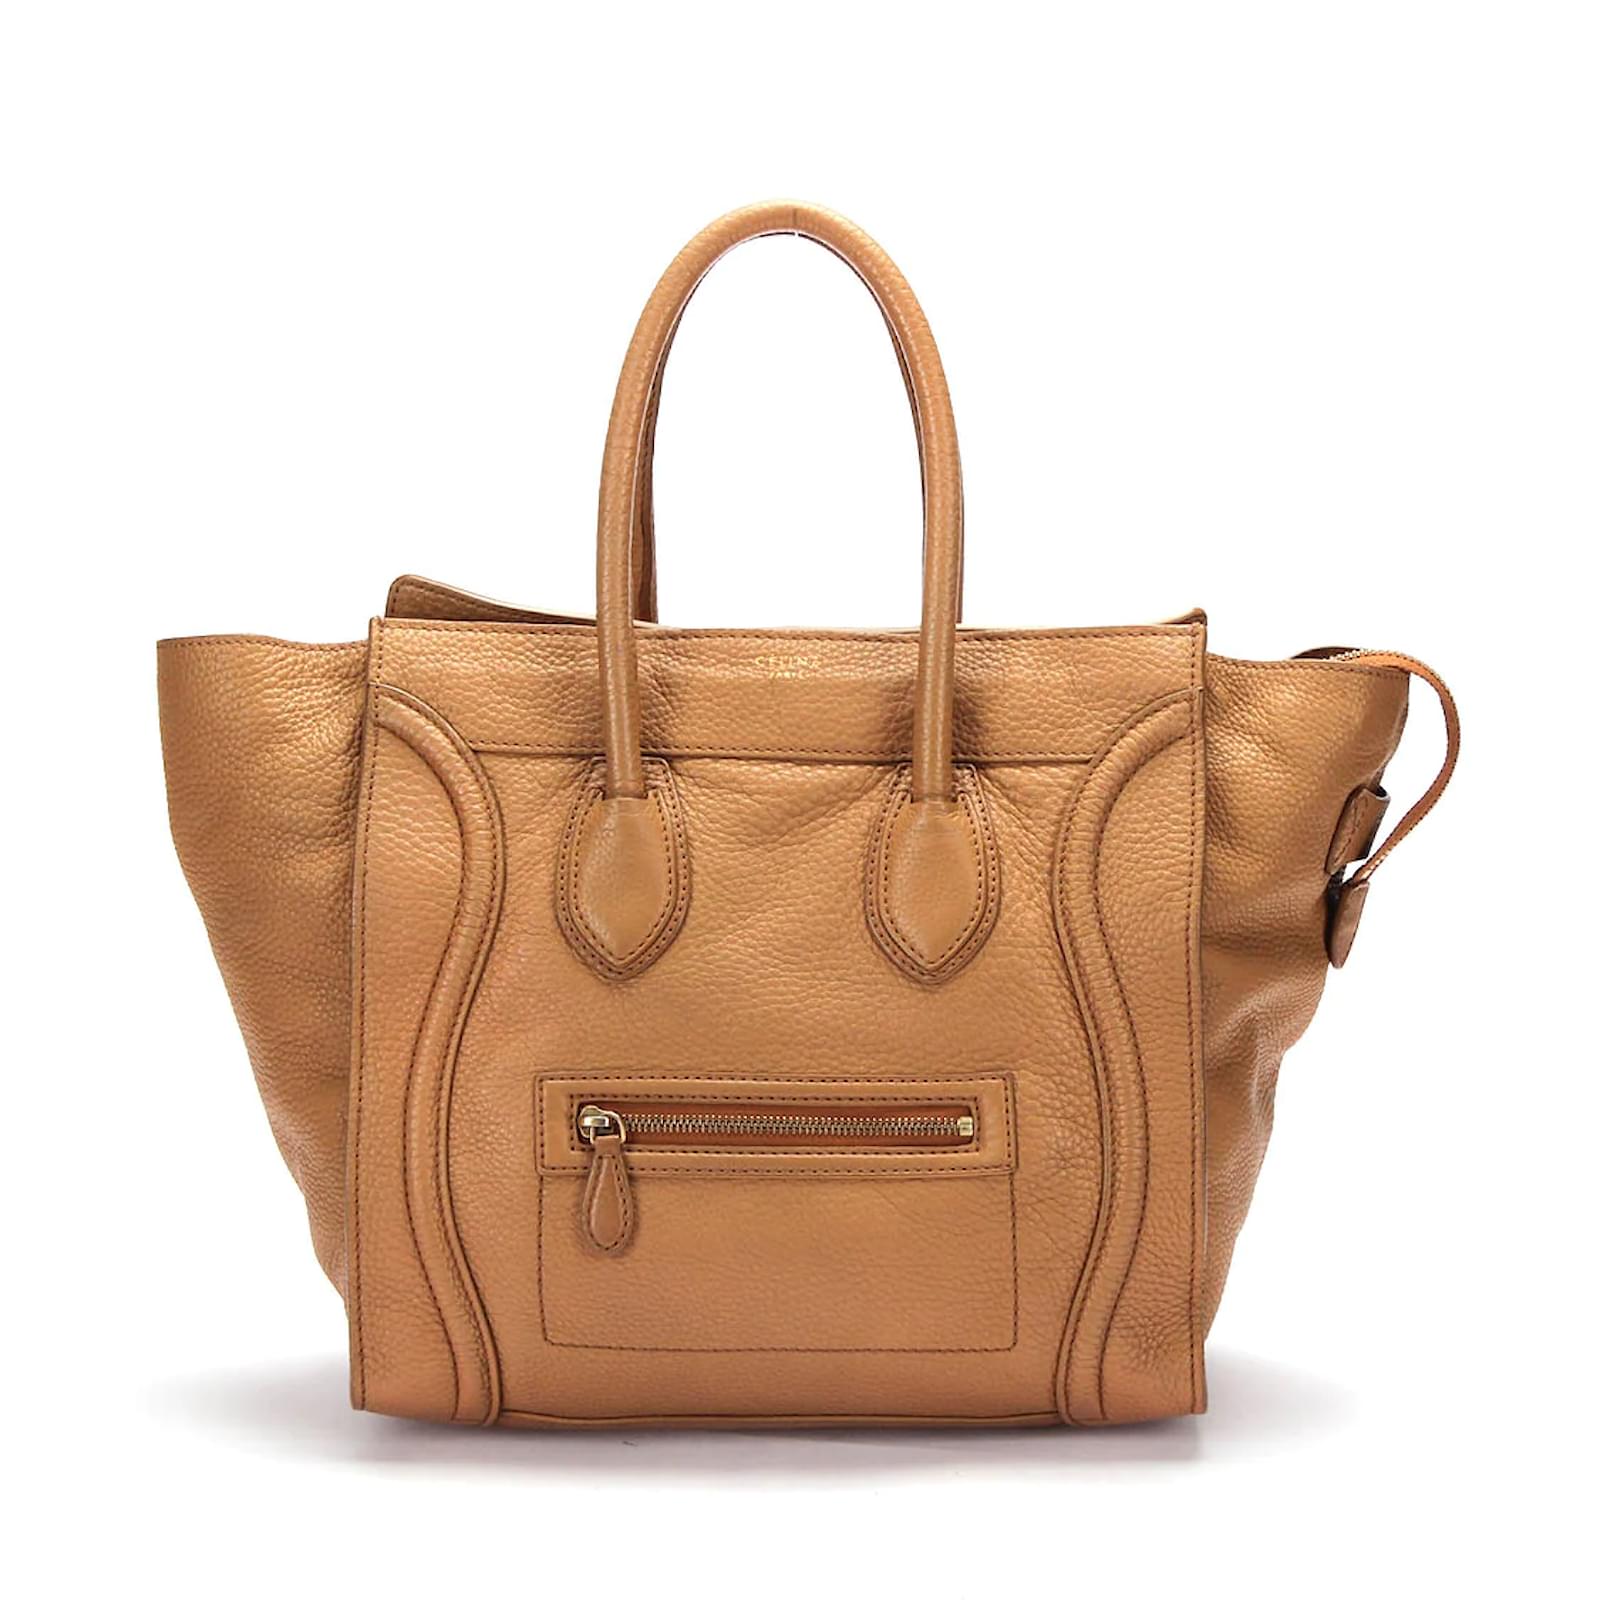 Celine Mini Luggage Handbag in Brown